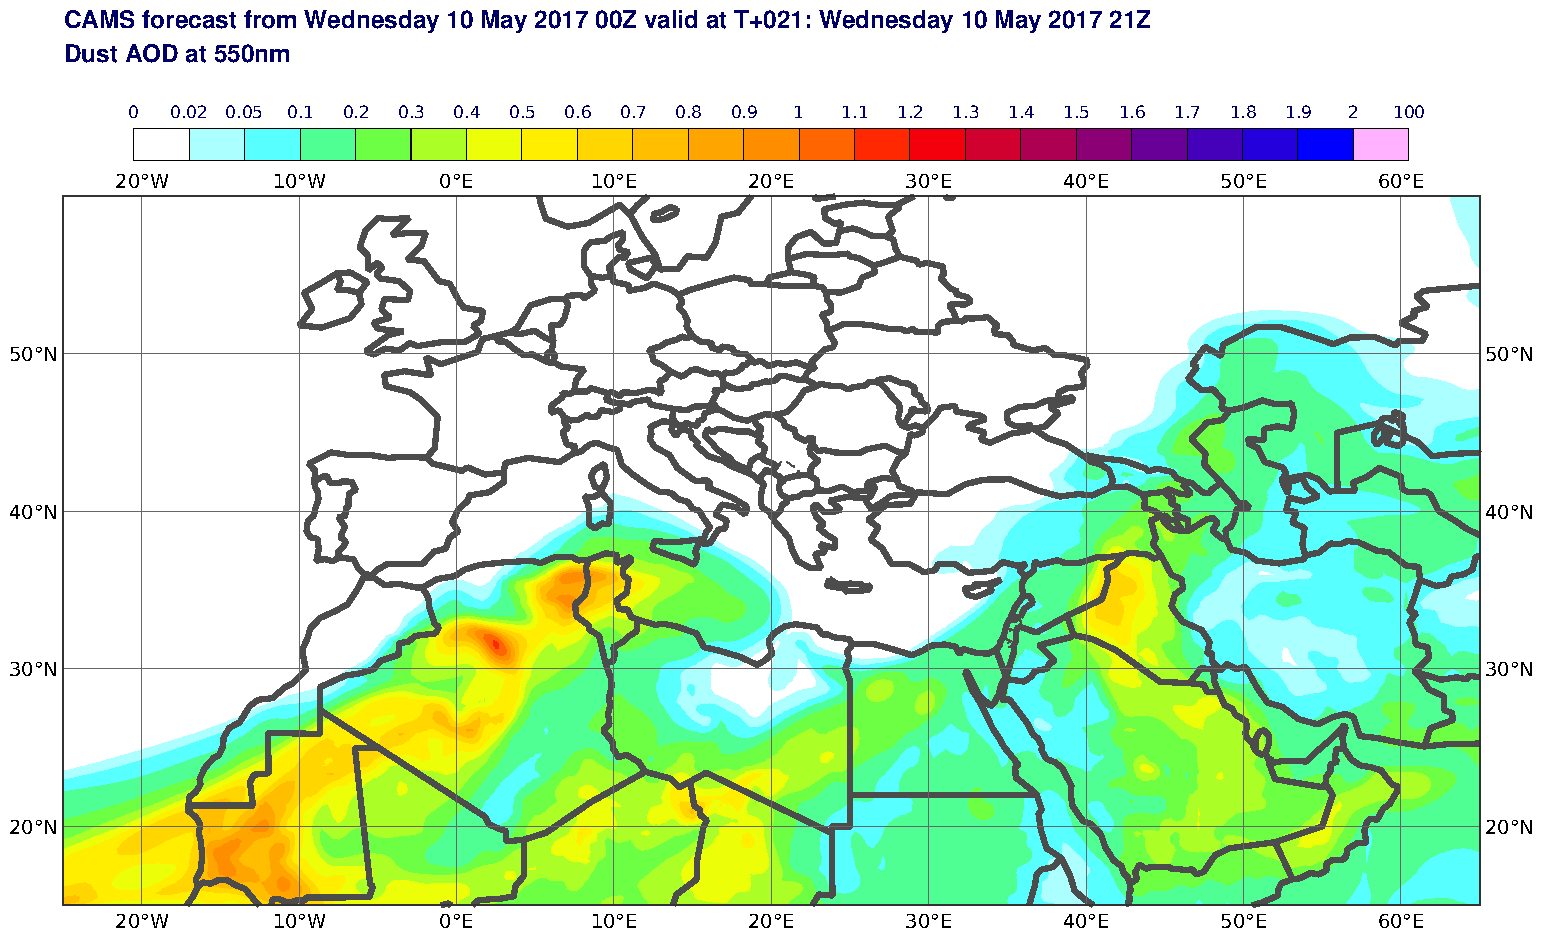 Dust AOD at 550nm valid at T21 - 2017-05-10 21:00